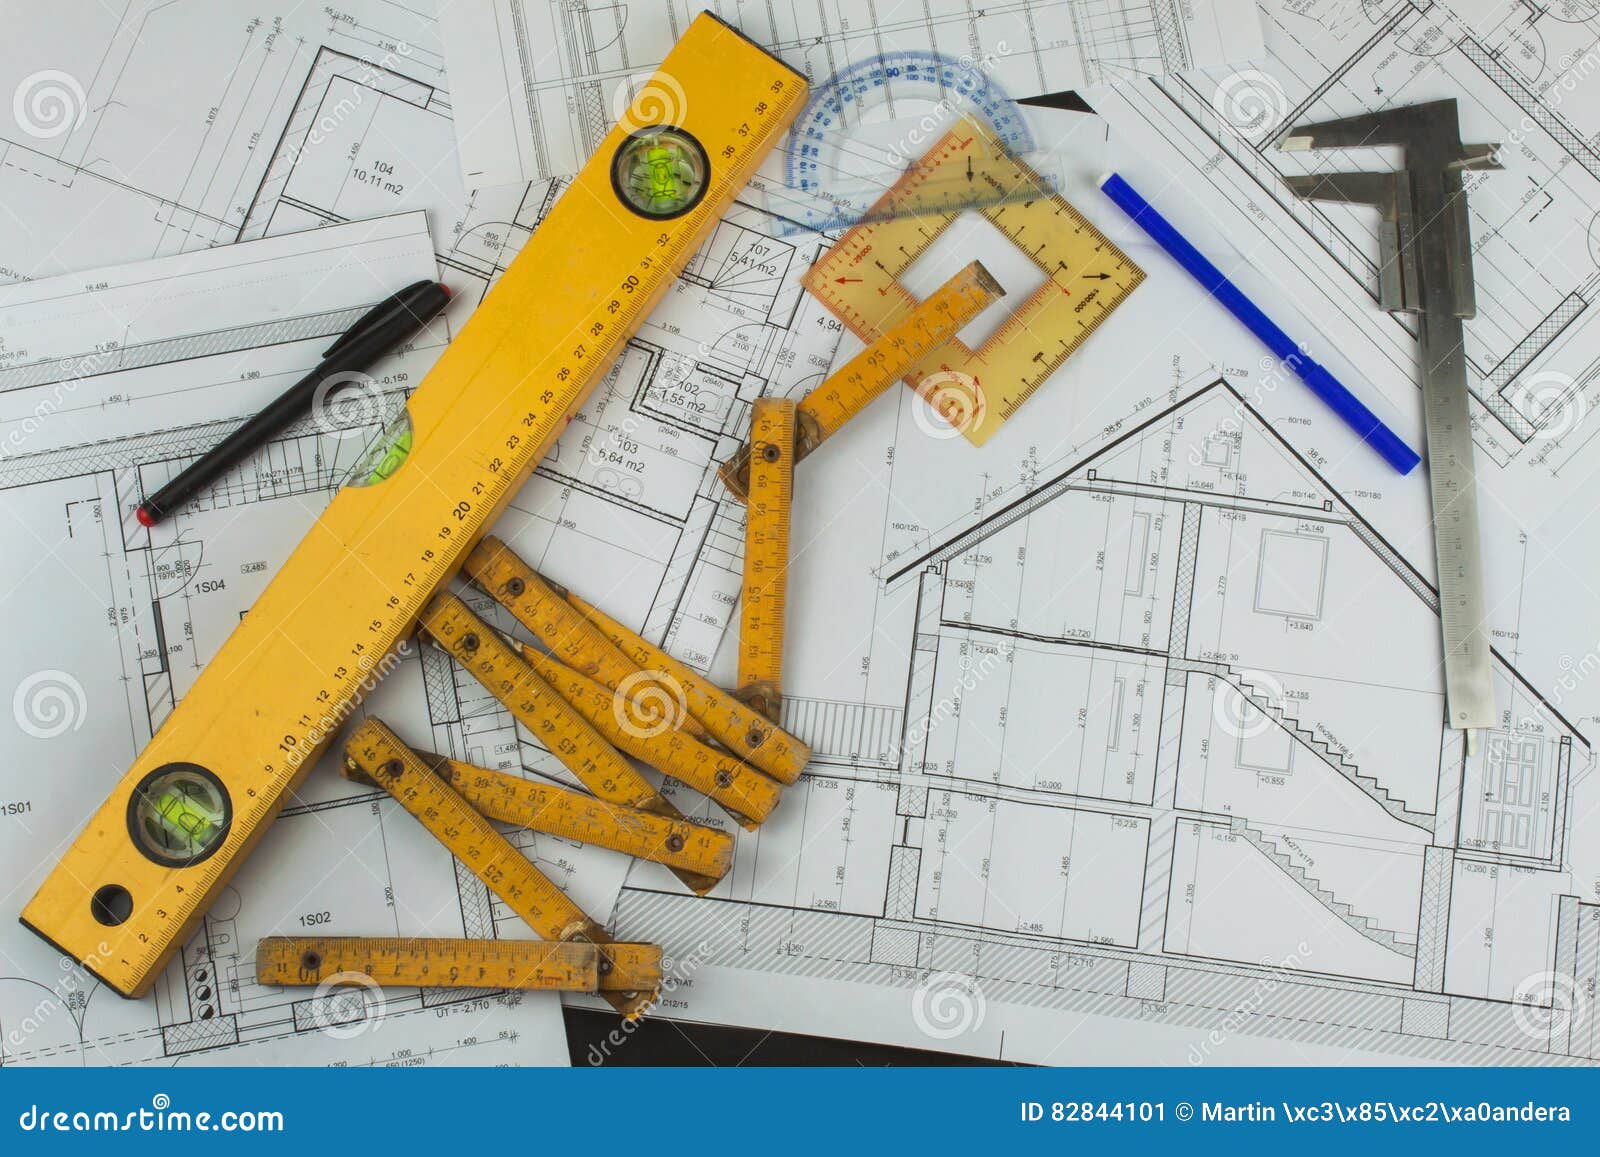 Desk Project Supervisor Plans Of Building Architectural Project